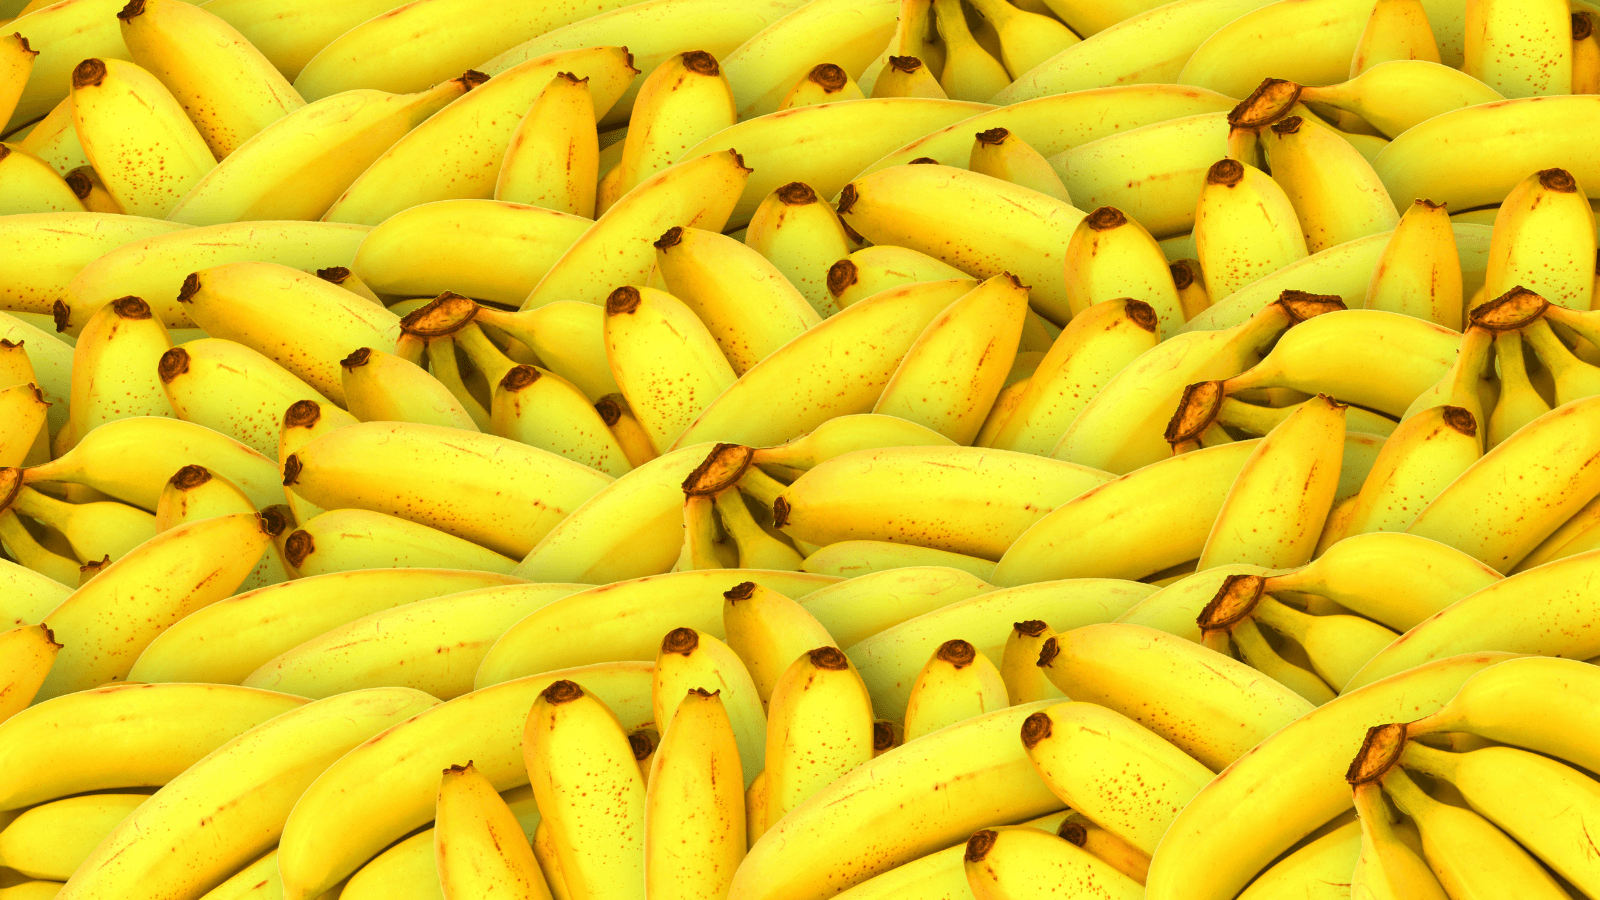 A photo of bananas